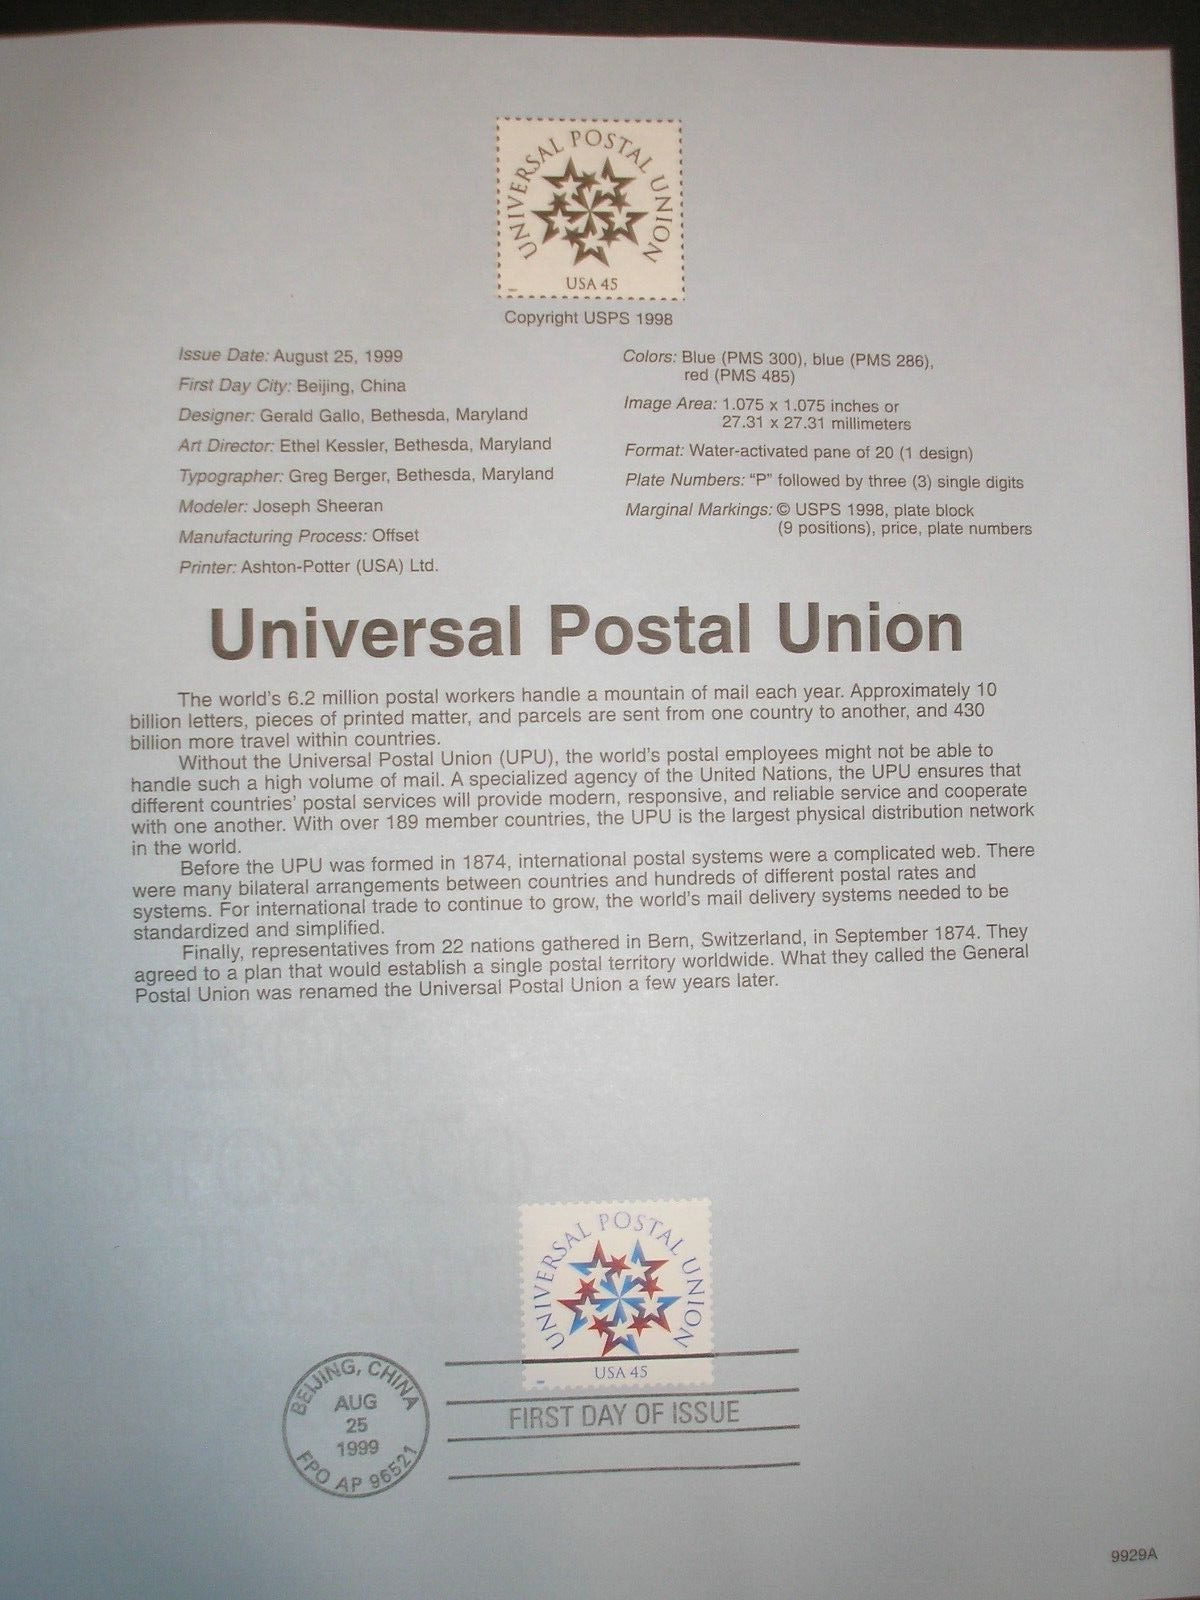 USPS Souvenir Page for .45 Scott 3332 Universal Postal Union Stamp.